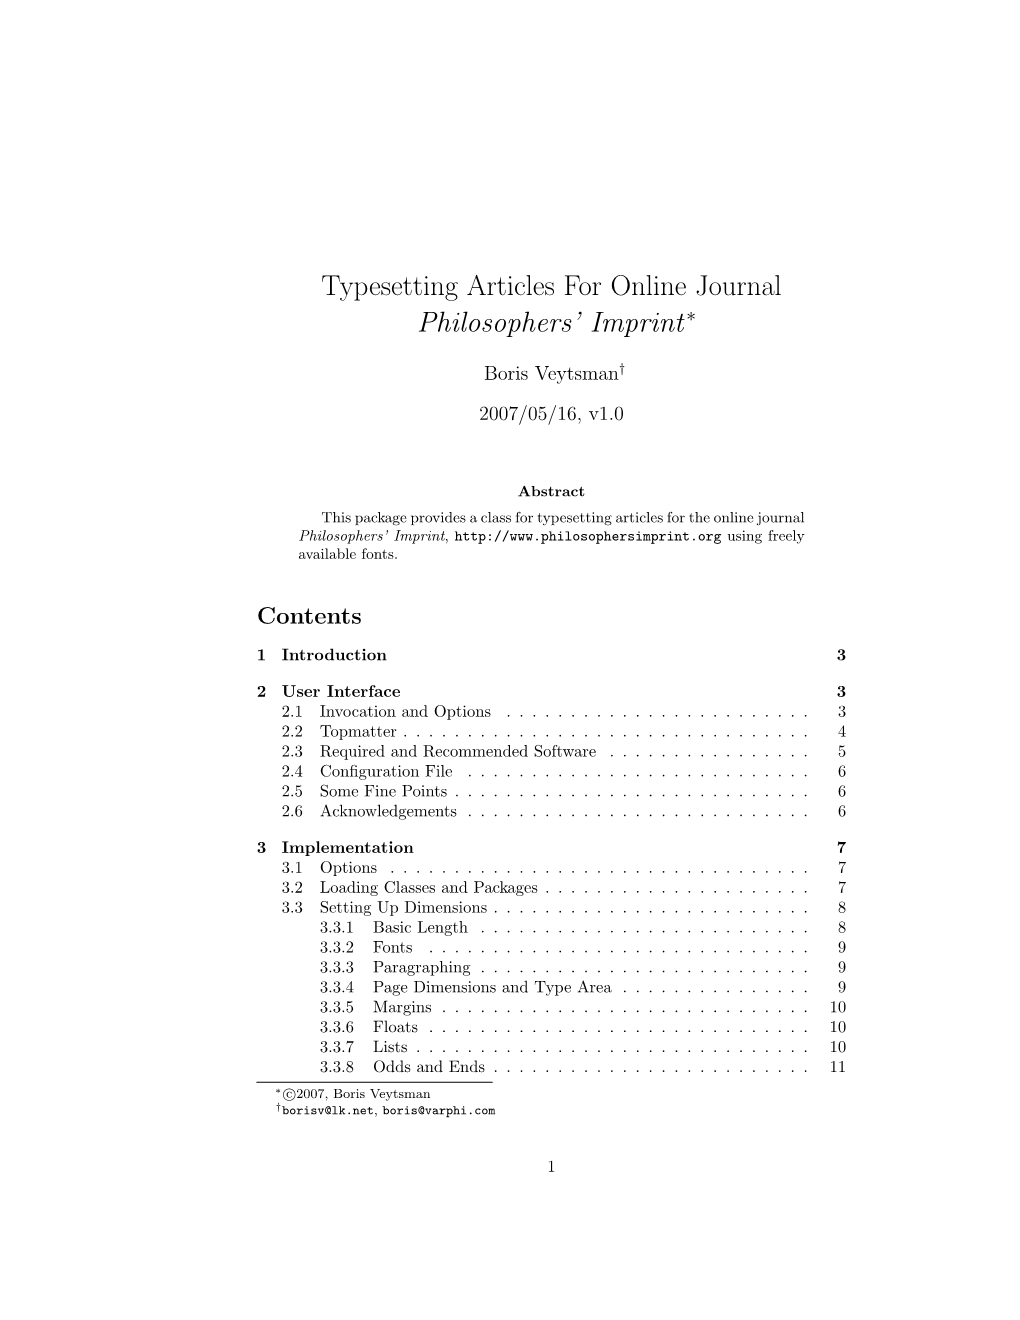 Typesetting Articles for Online Journal Philosophers' Imprint